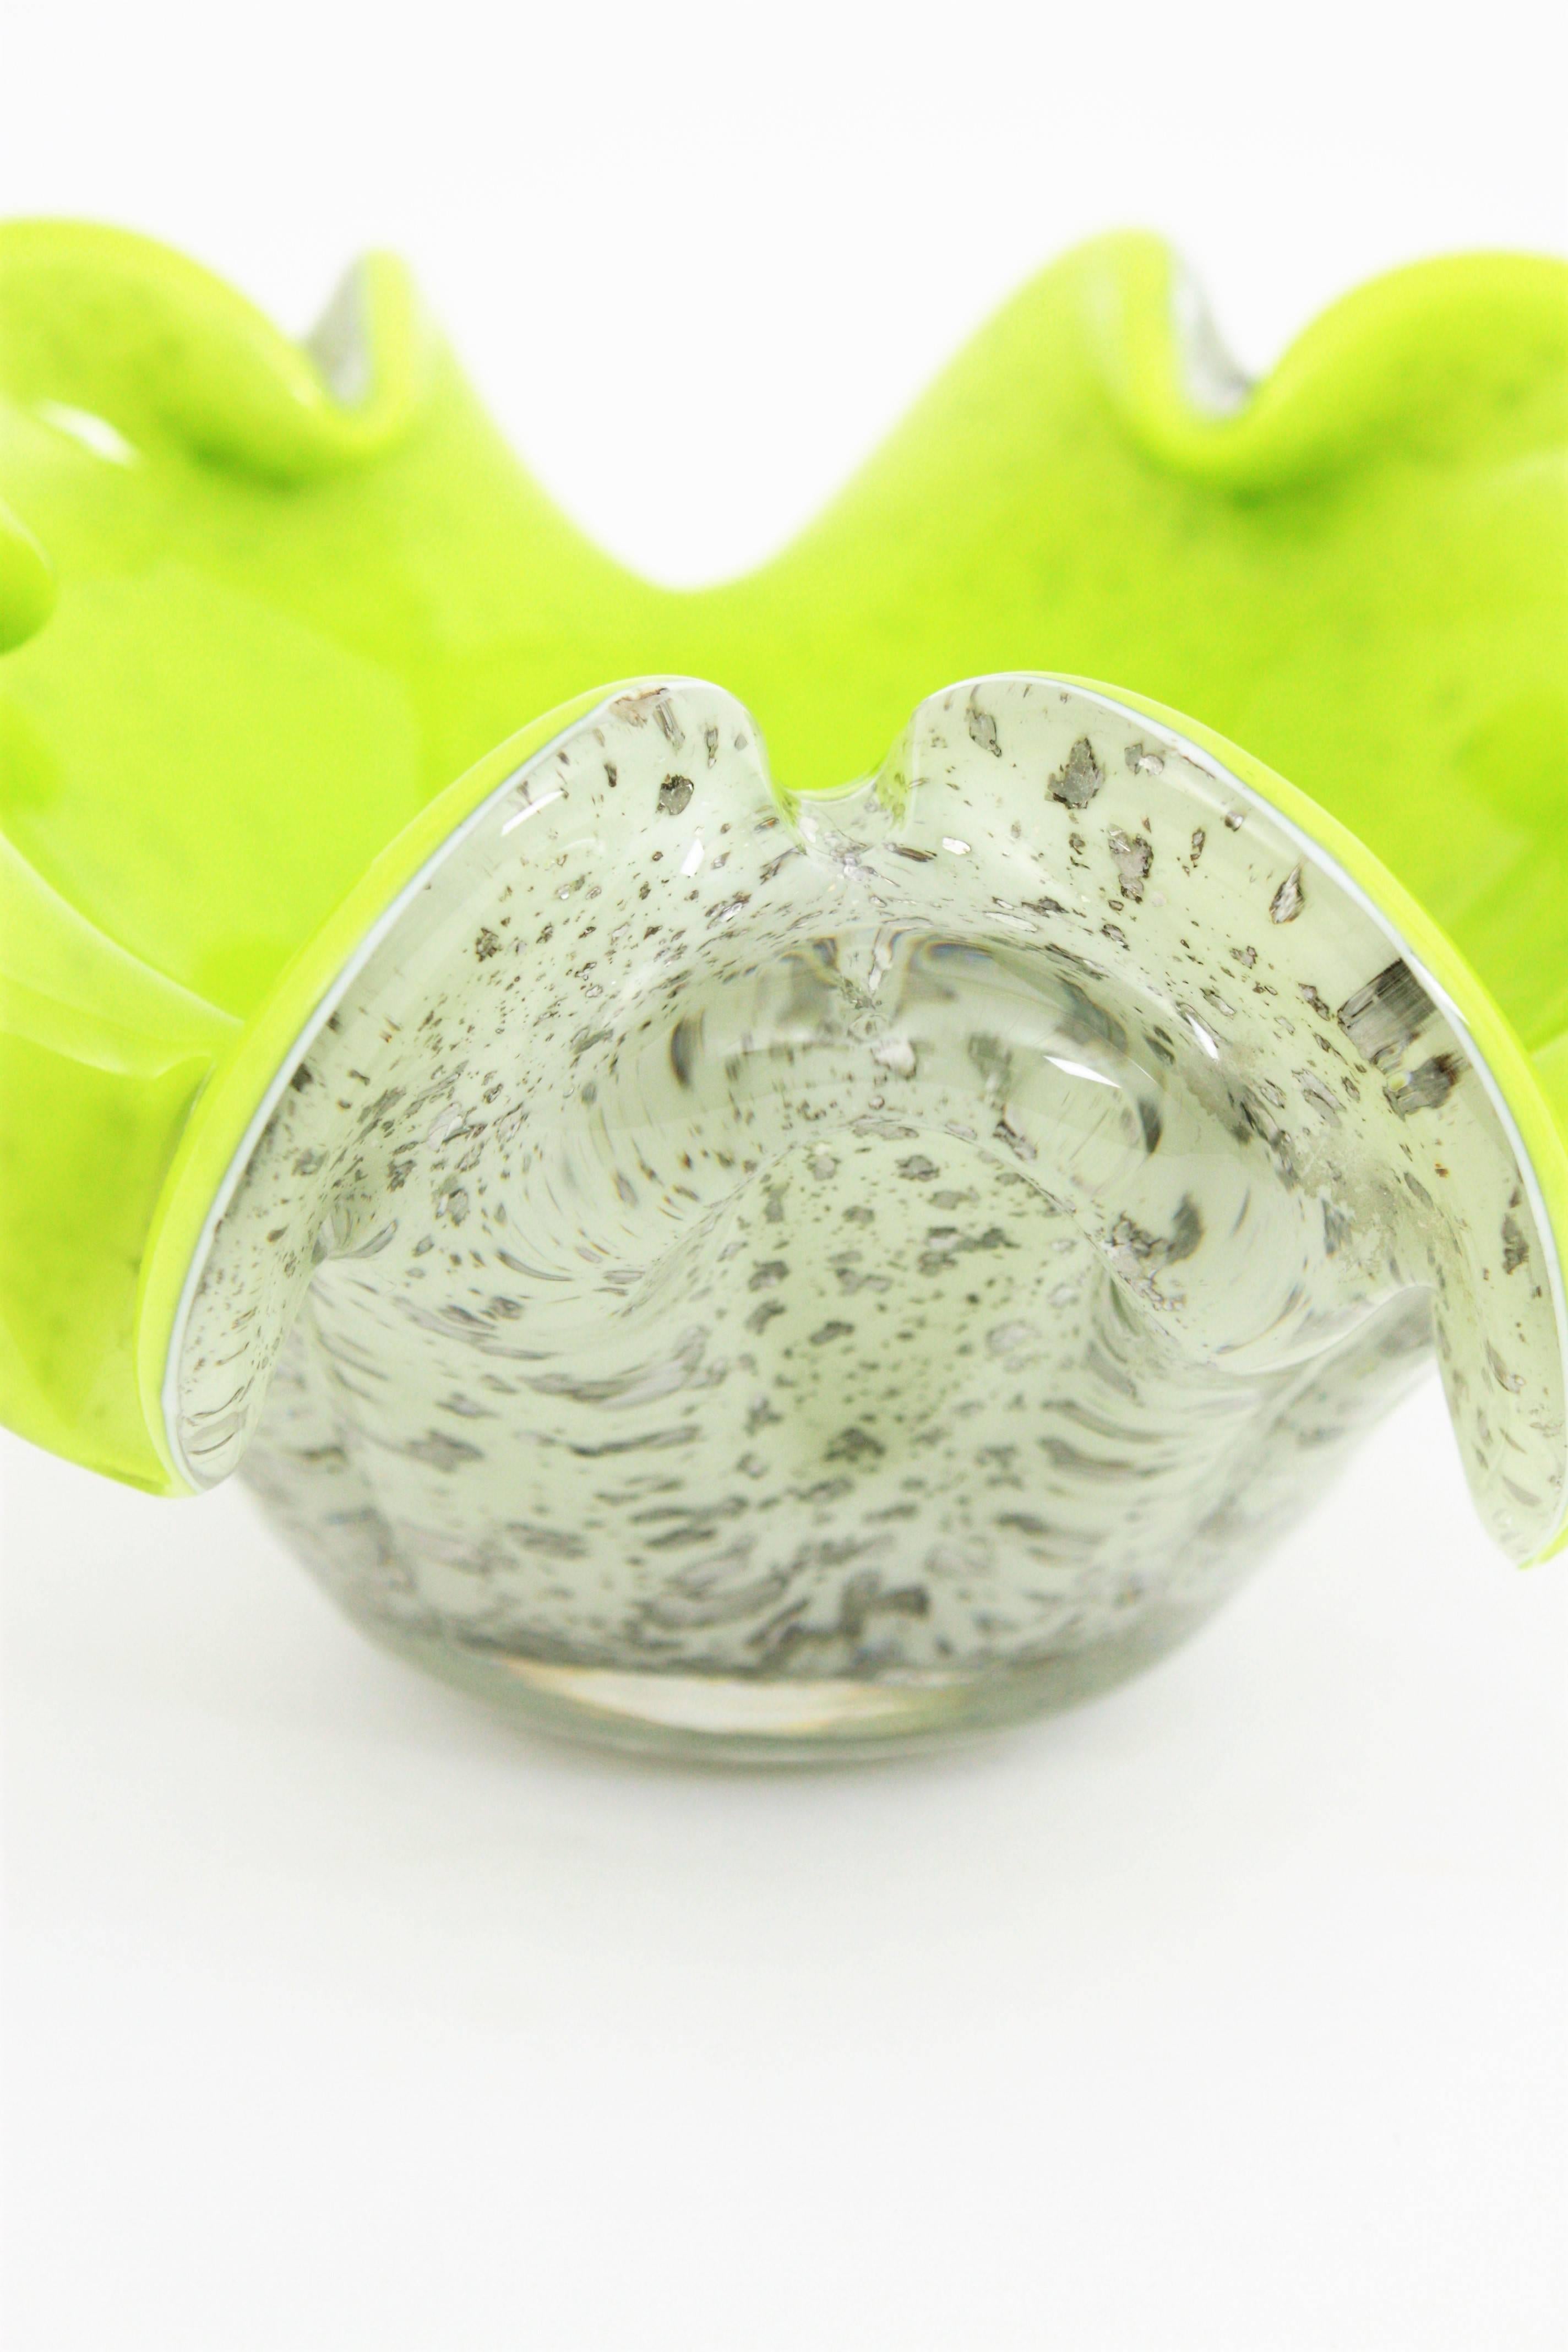 Fratelli Toso Murano Green White Silver Flecks Italian Art Glass Bowl 1